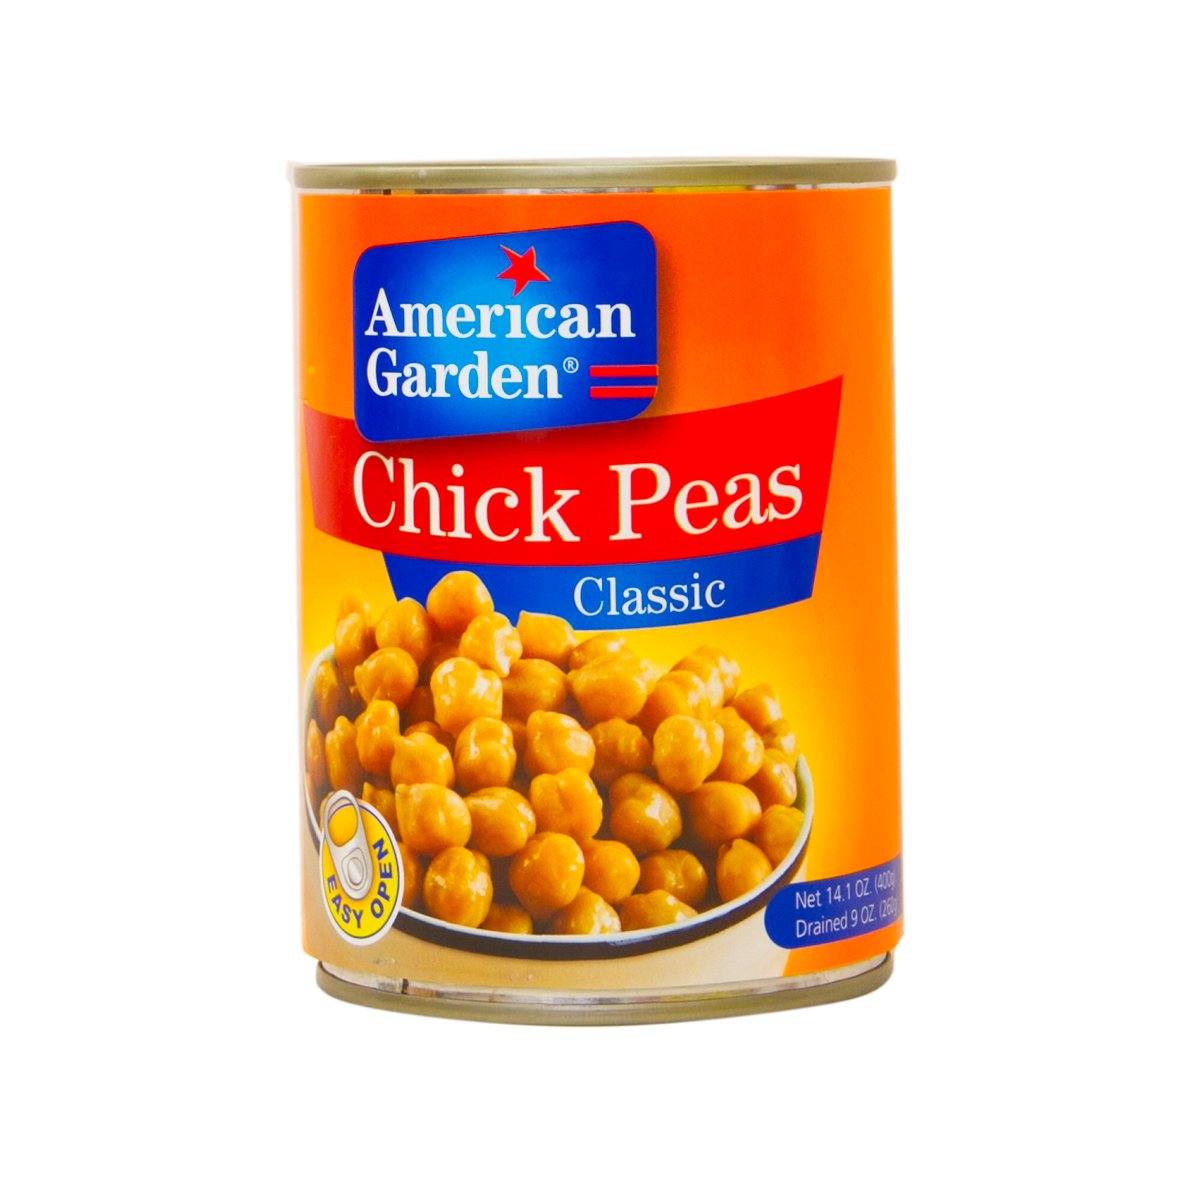 American Garden Chick Peas Classic 400g